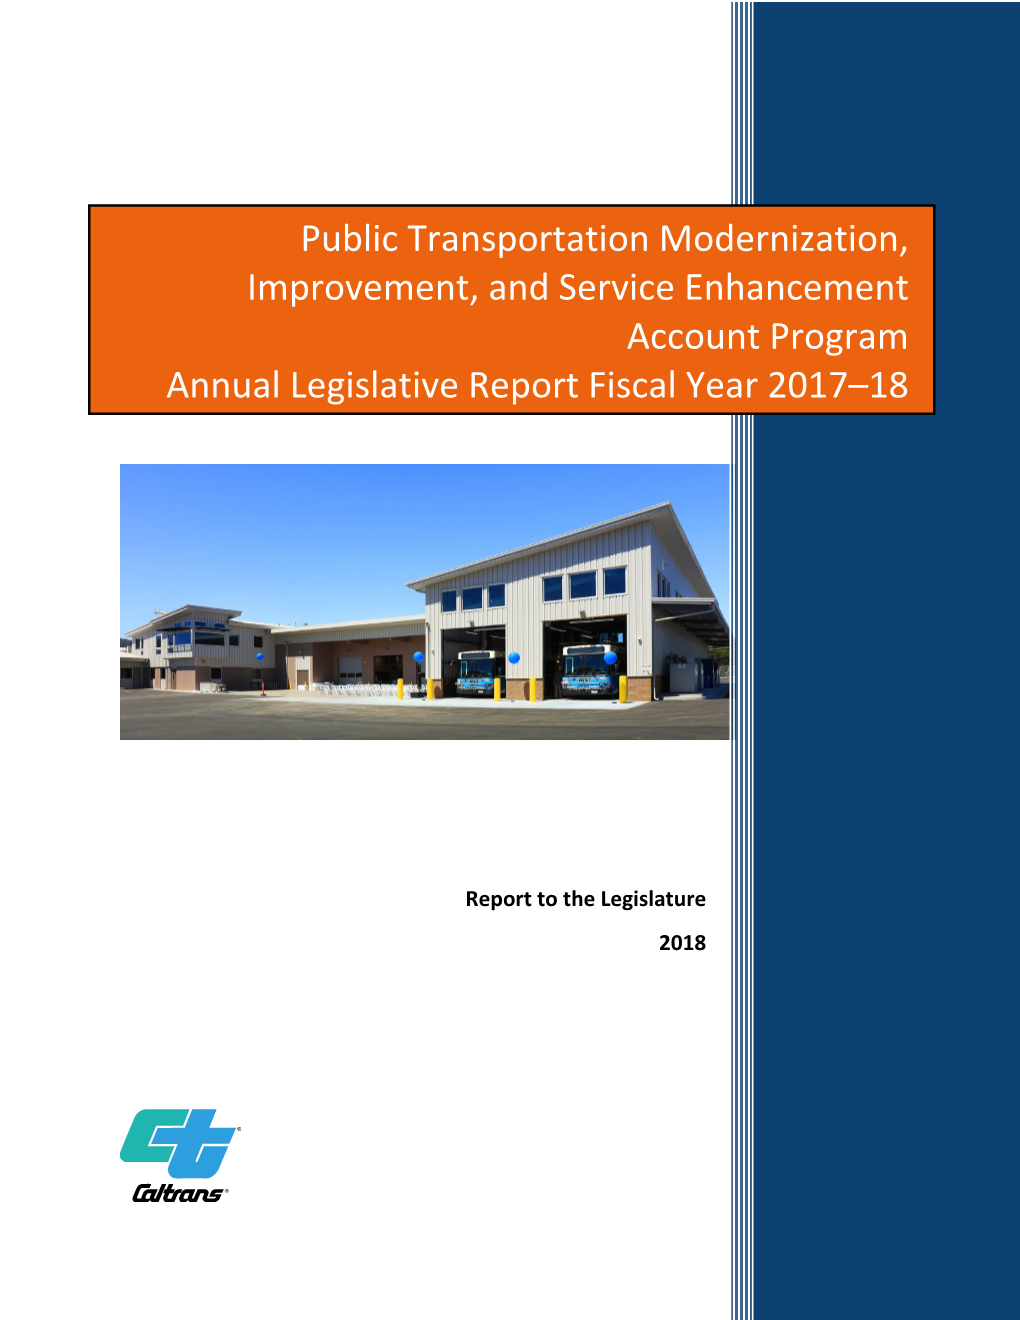 Public Transportation Modernization, Improvement, and Service Enhancement Account Program Annual Legislative Report Fiscal Year 2017–18